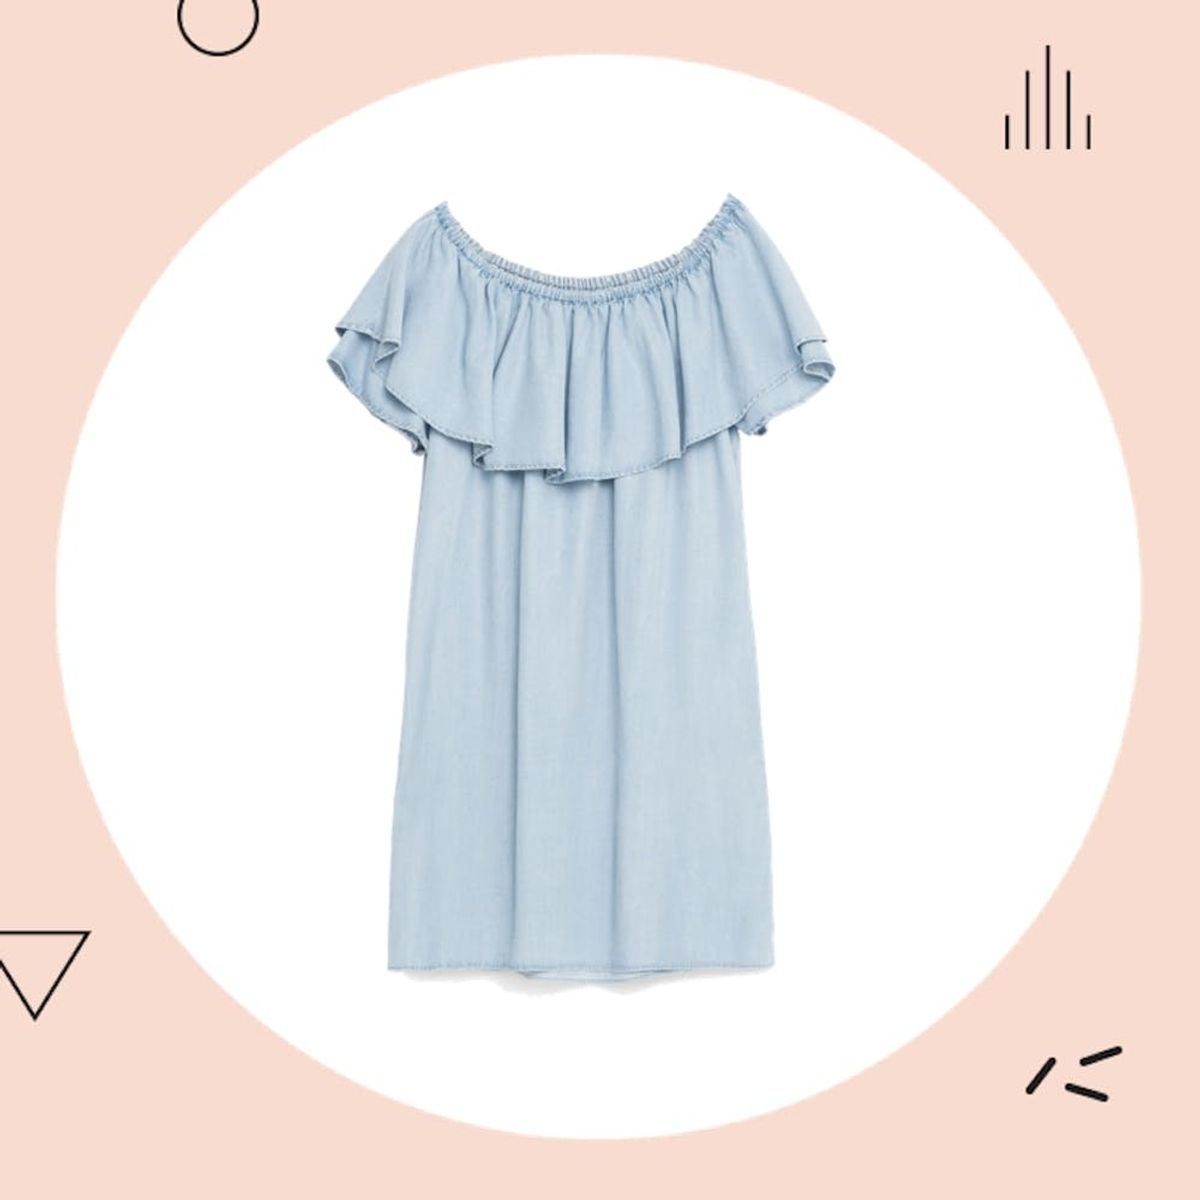 This $50 Zara Dress Has Its Own Tumblr Account